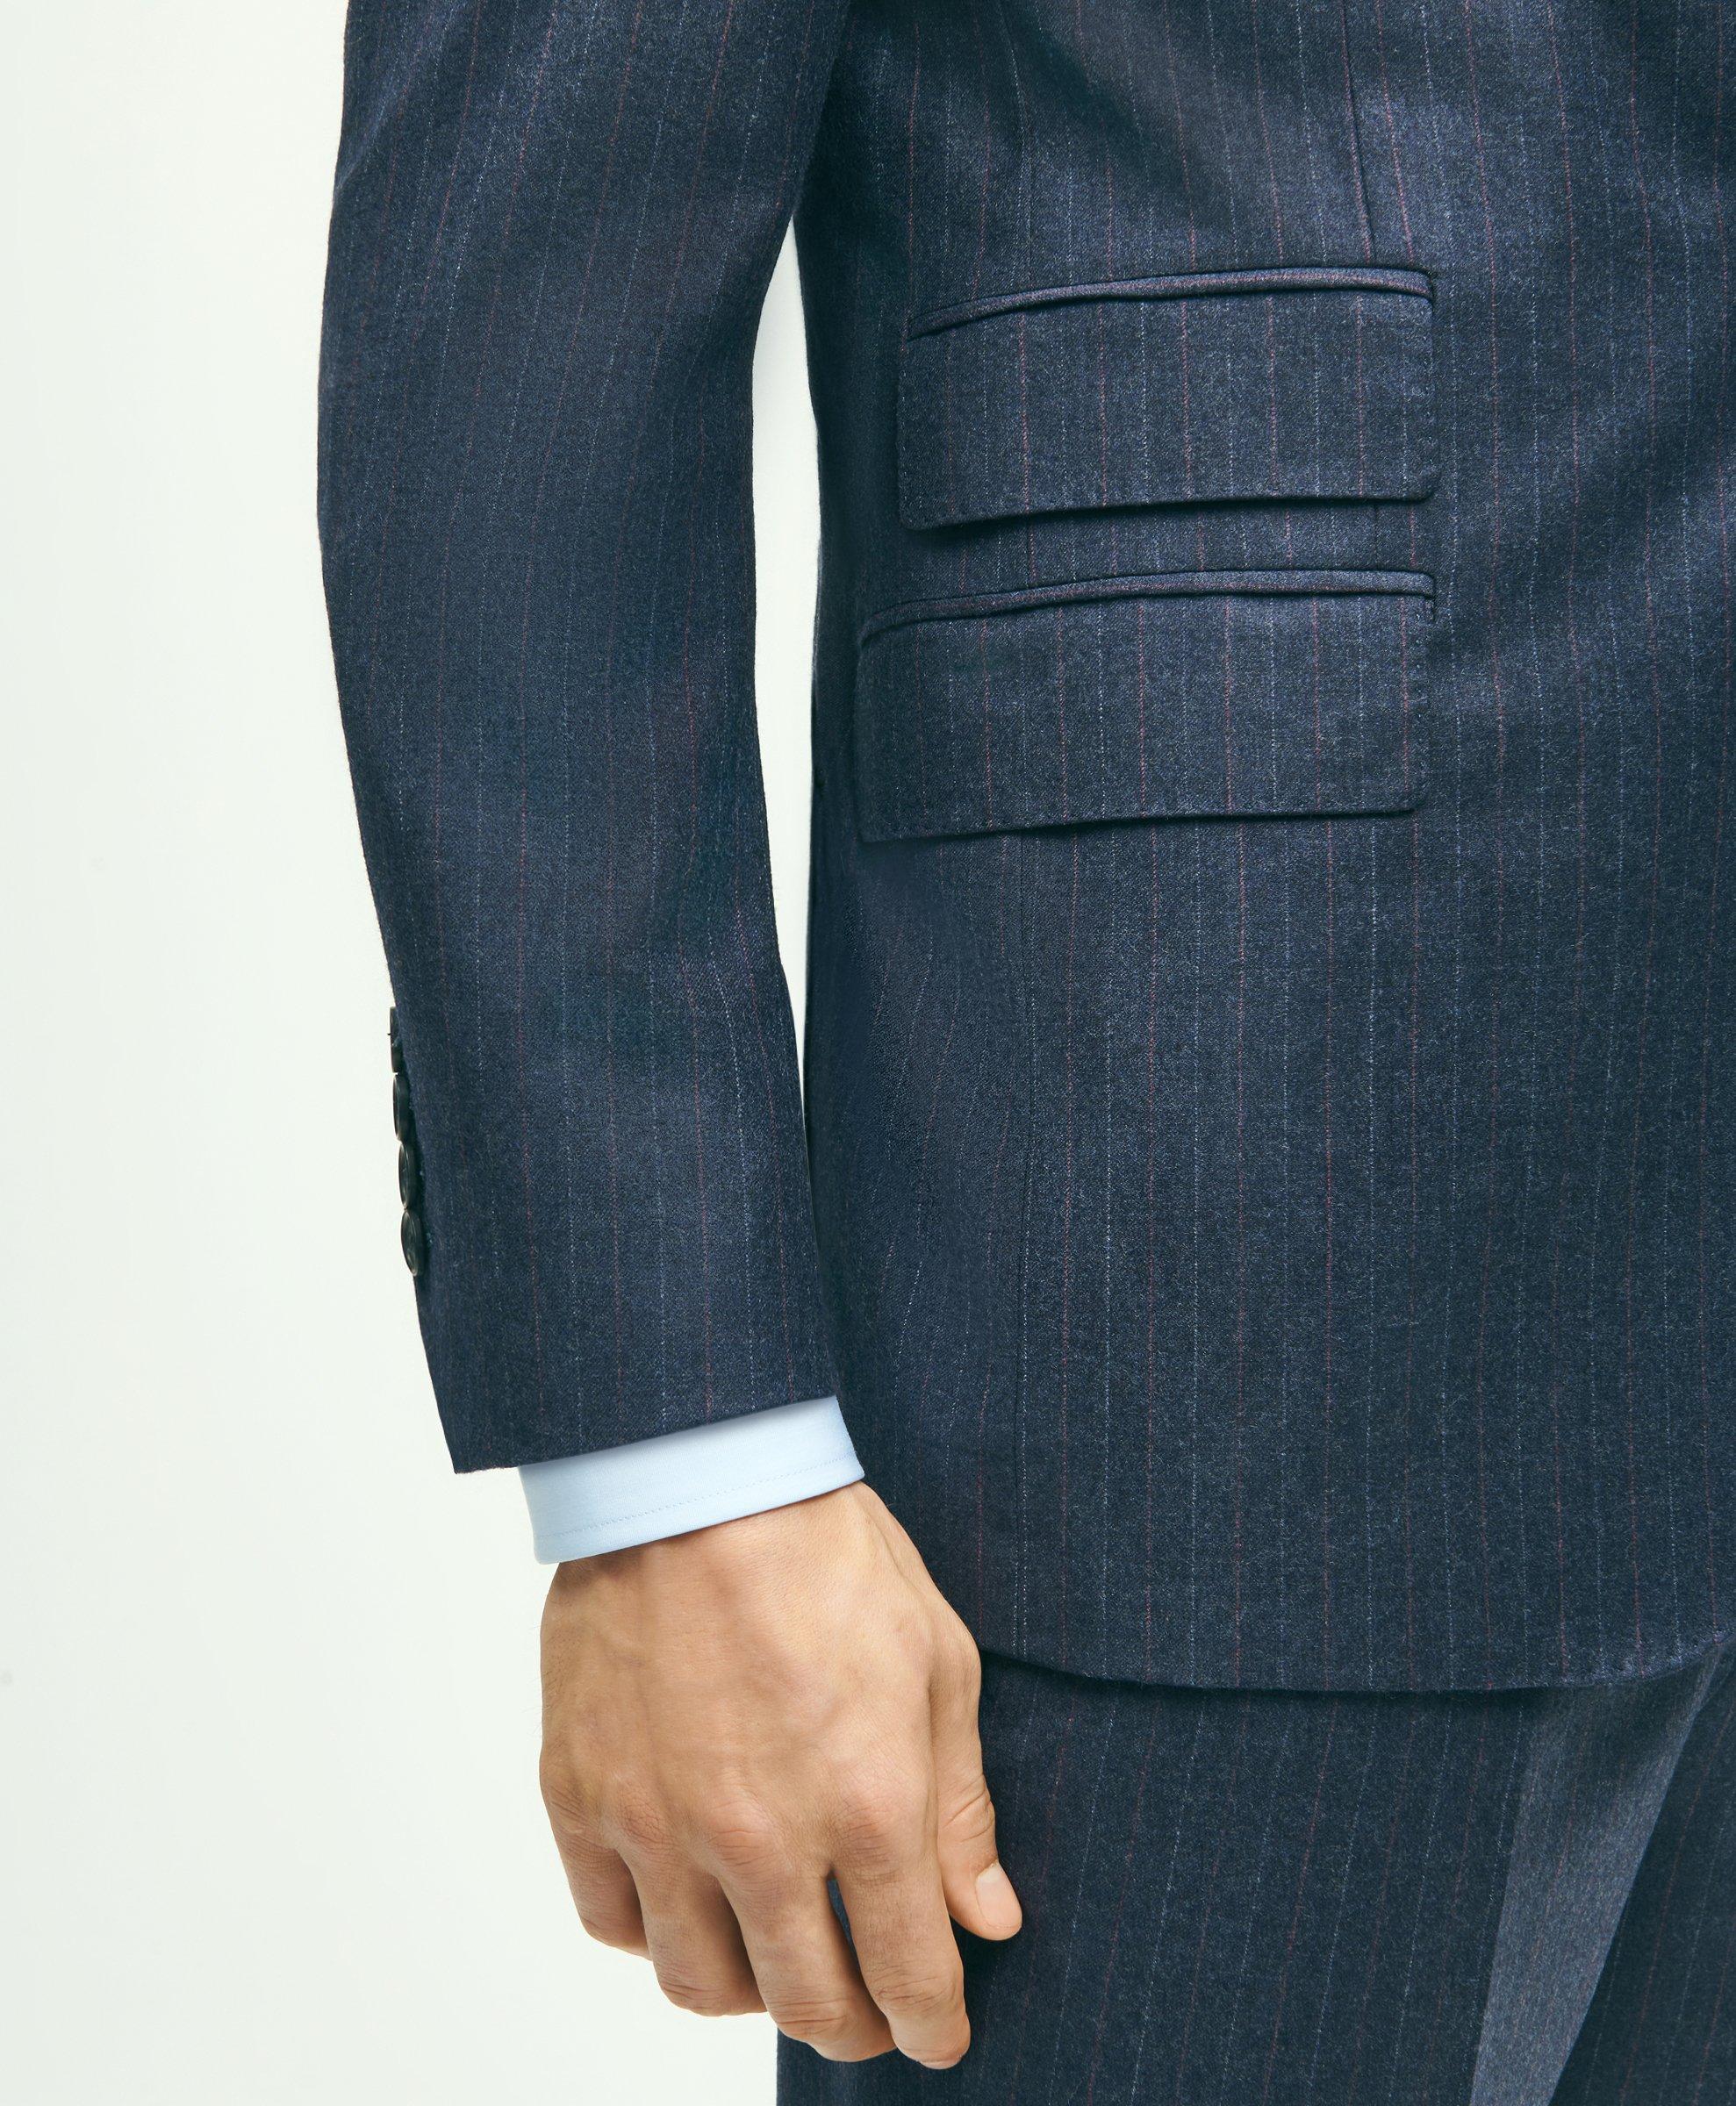 Navy Blue Pinstripe Suit In Stretch Wool